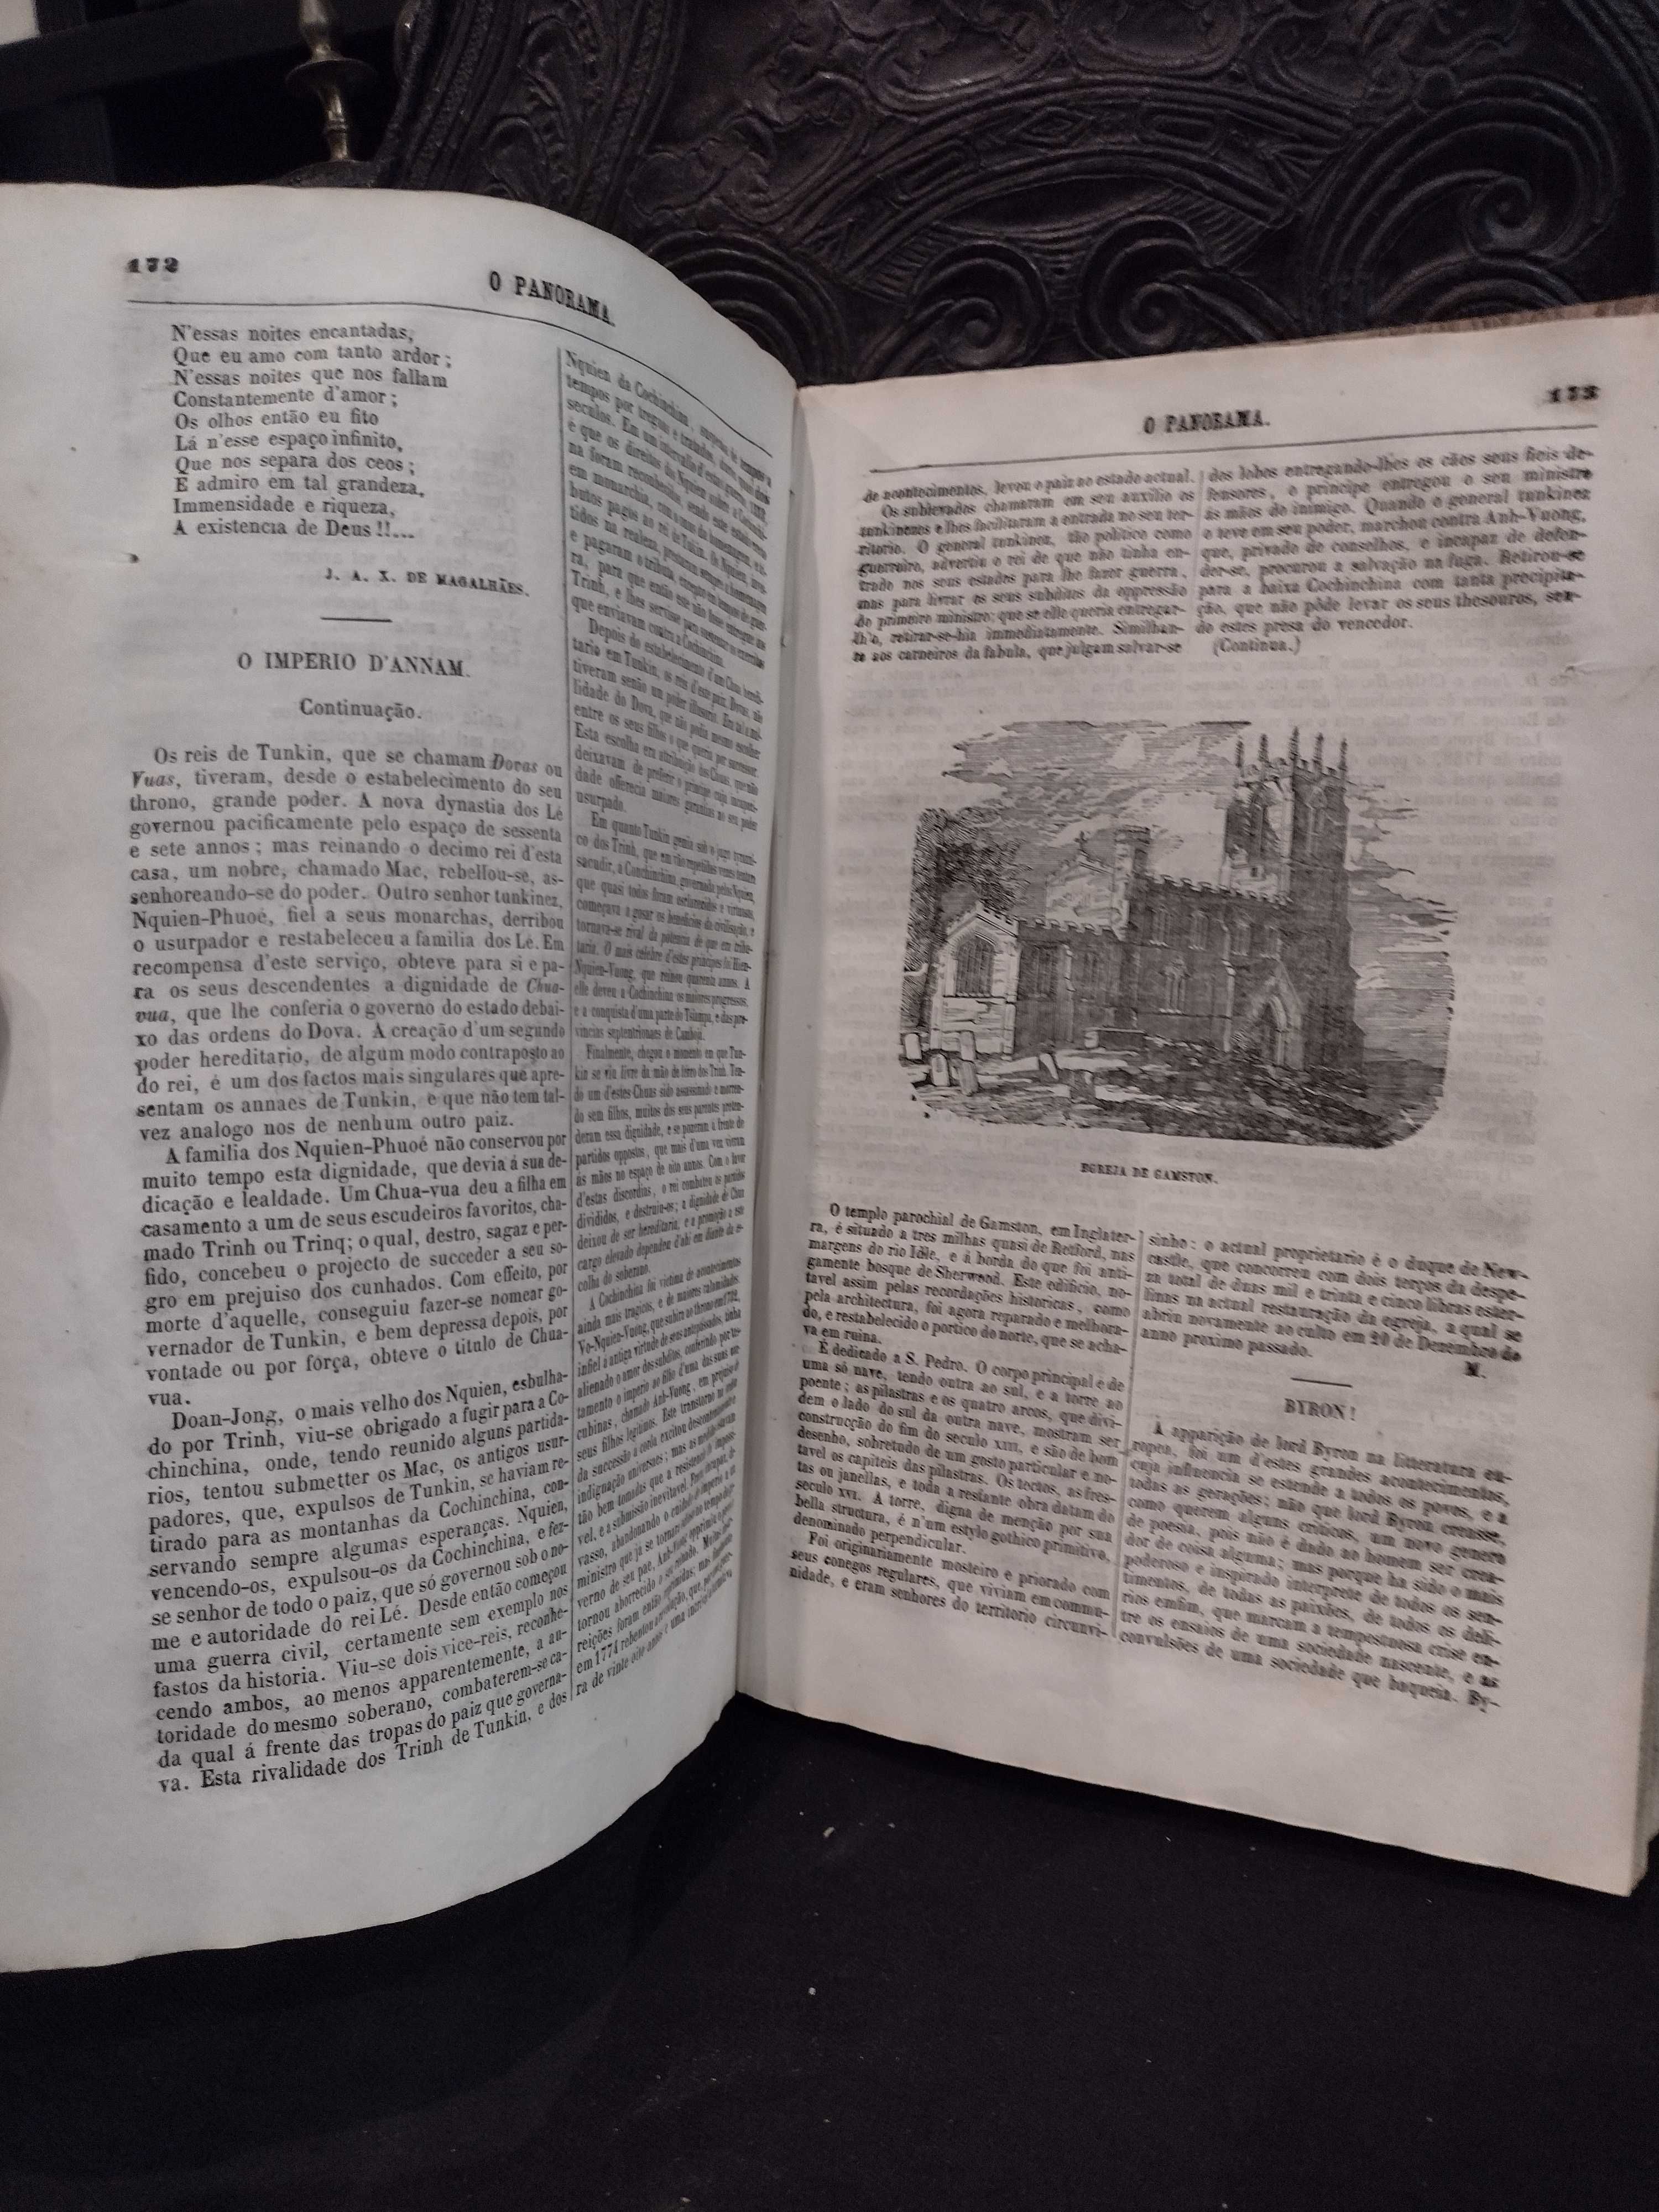 O Panorama Jornal Litterario e Instructivo 1857 Vol XIV